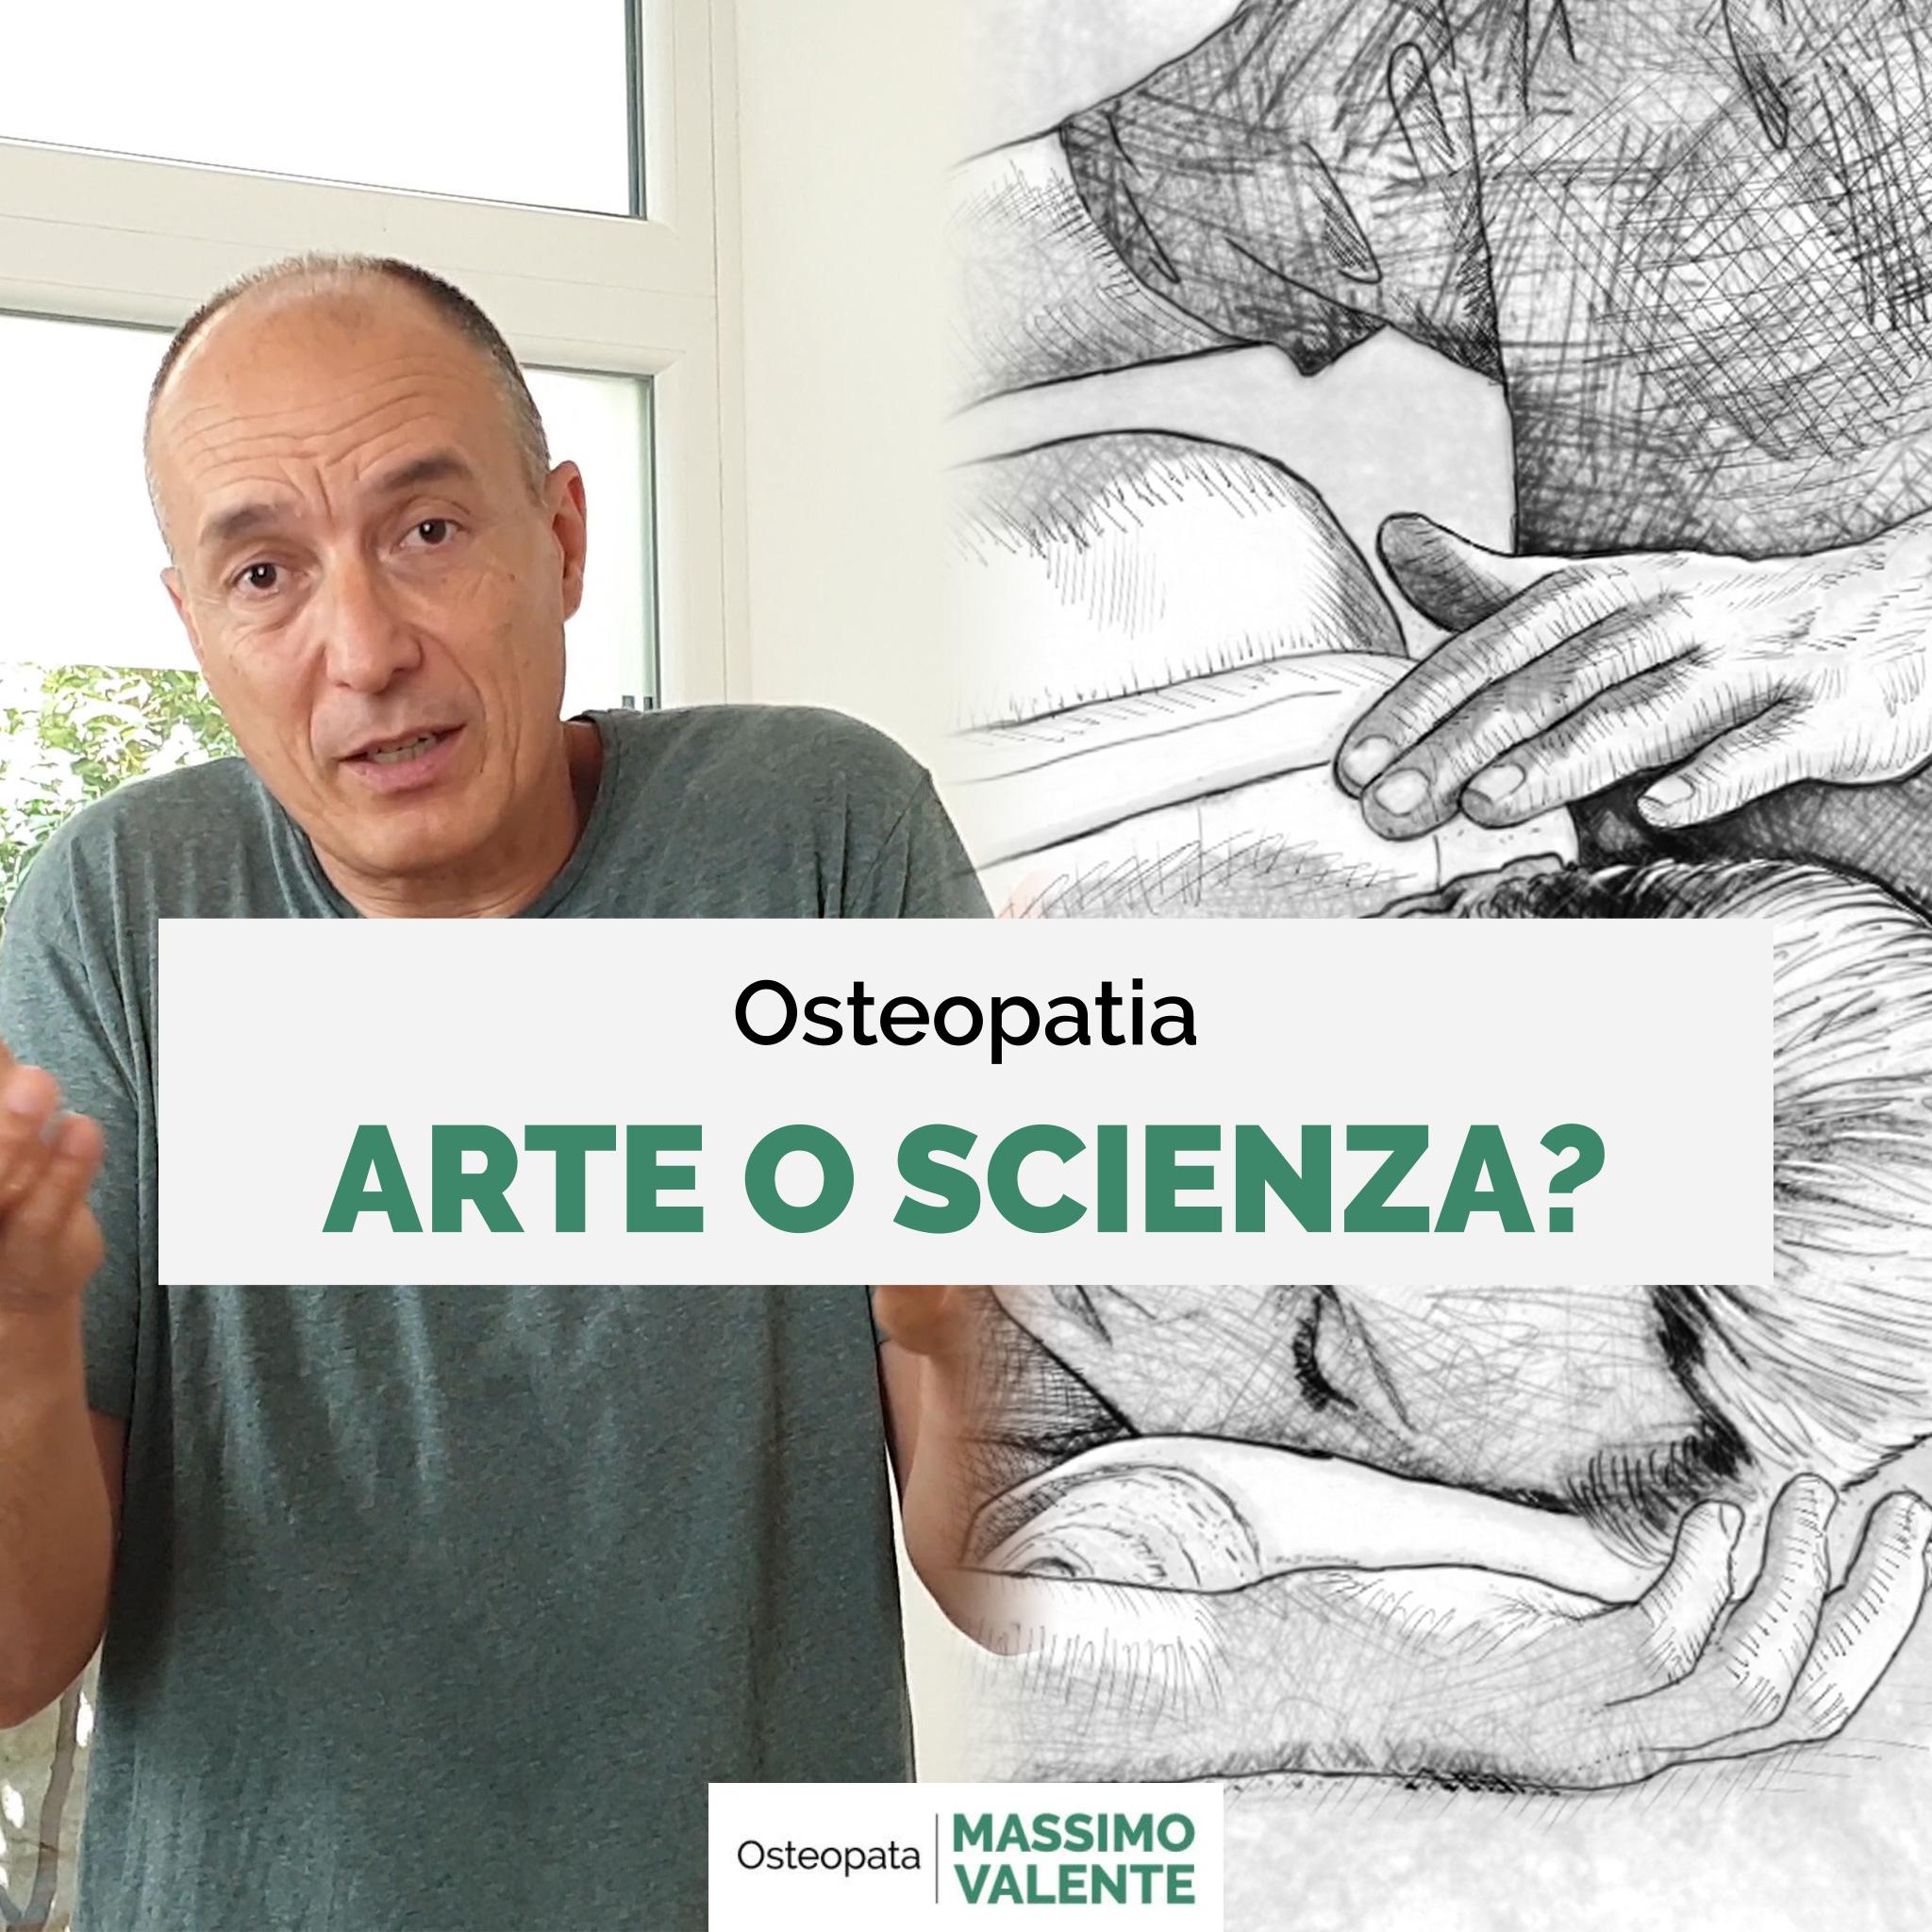 Osteopatia: arte o scienza?